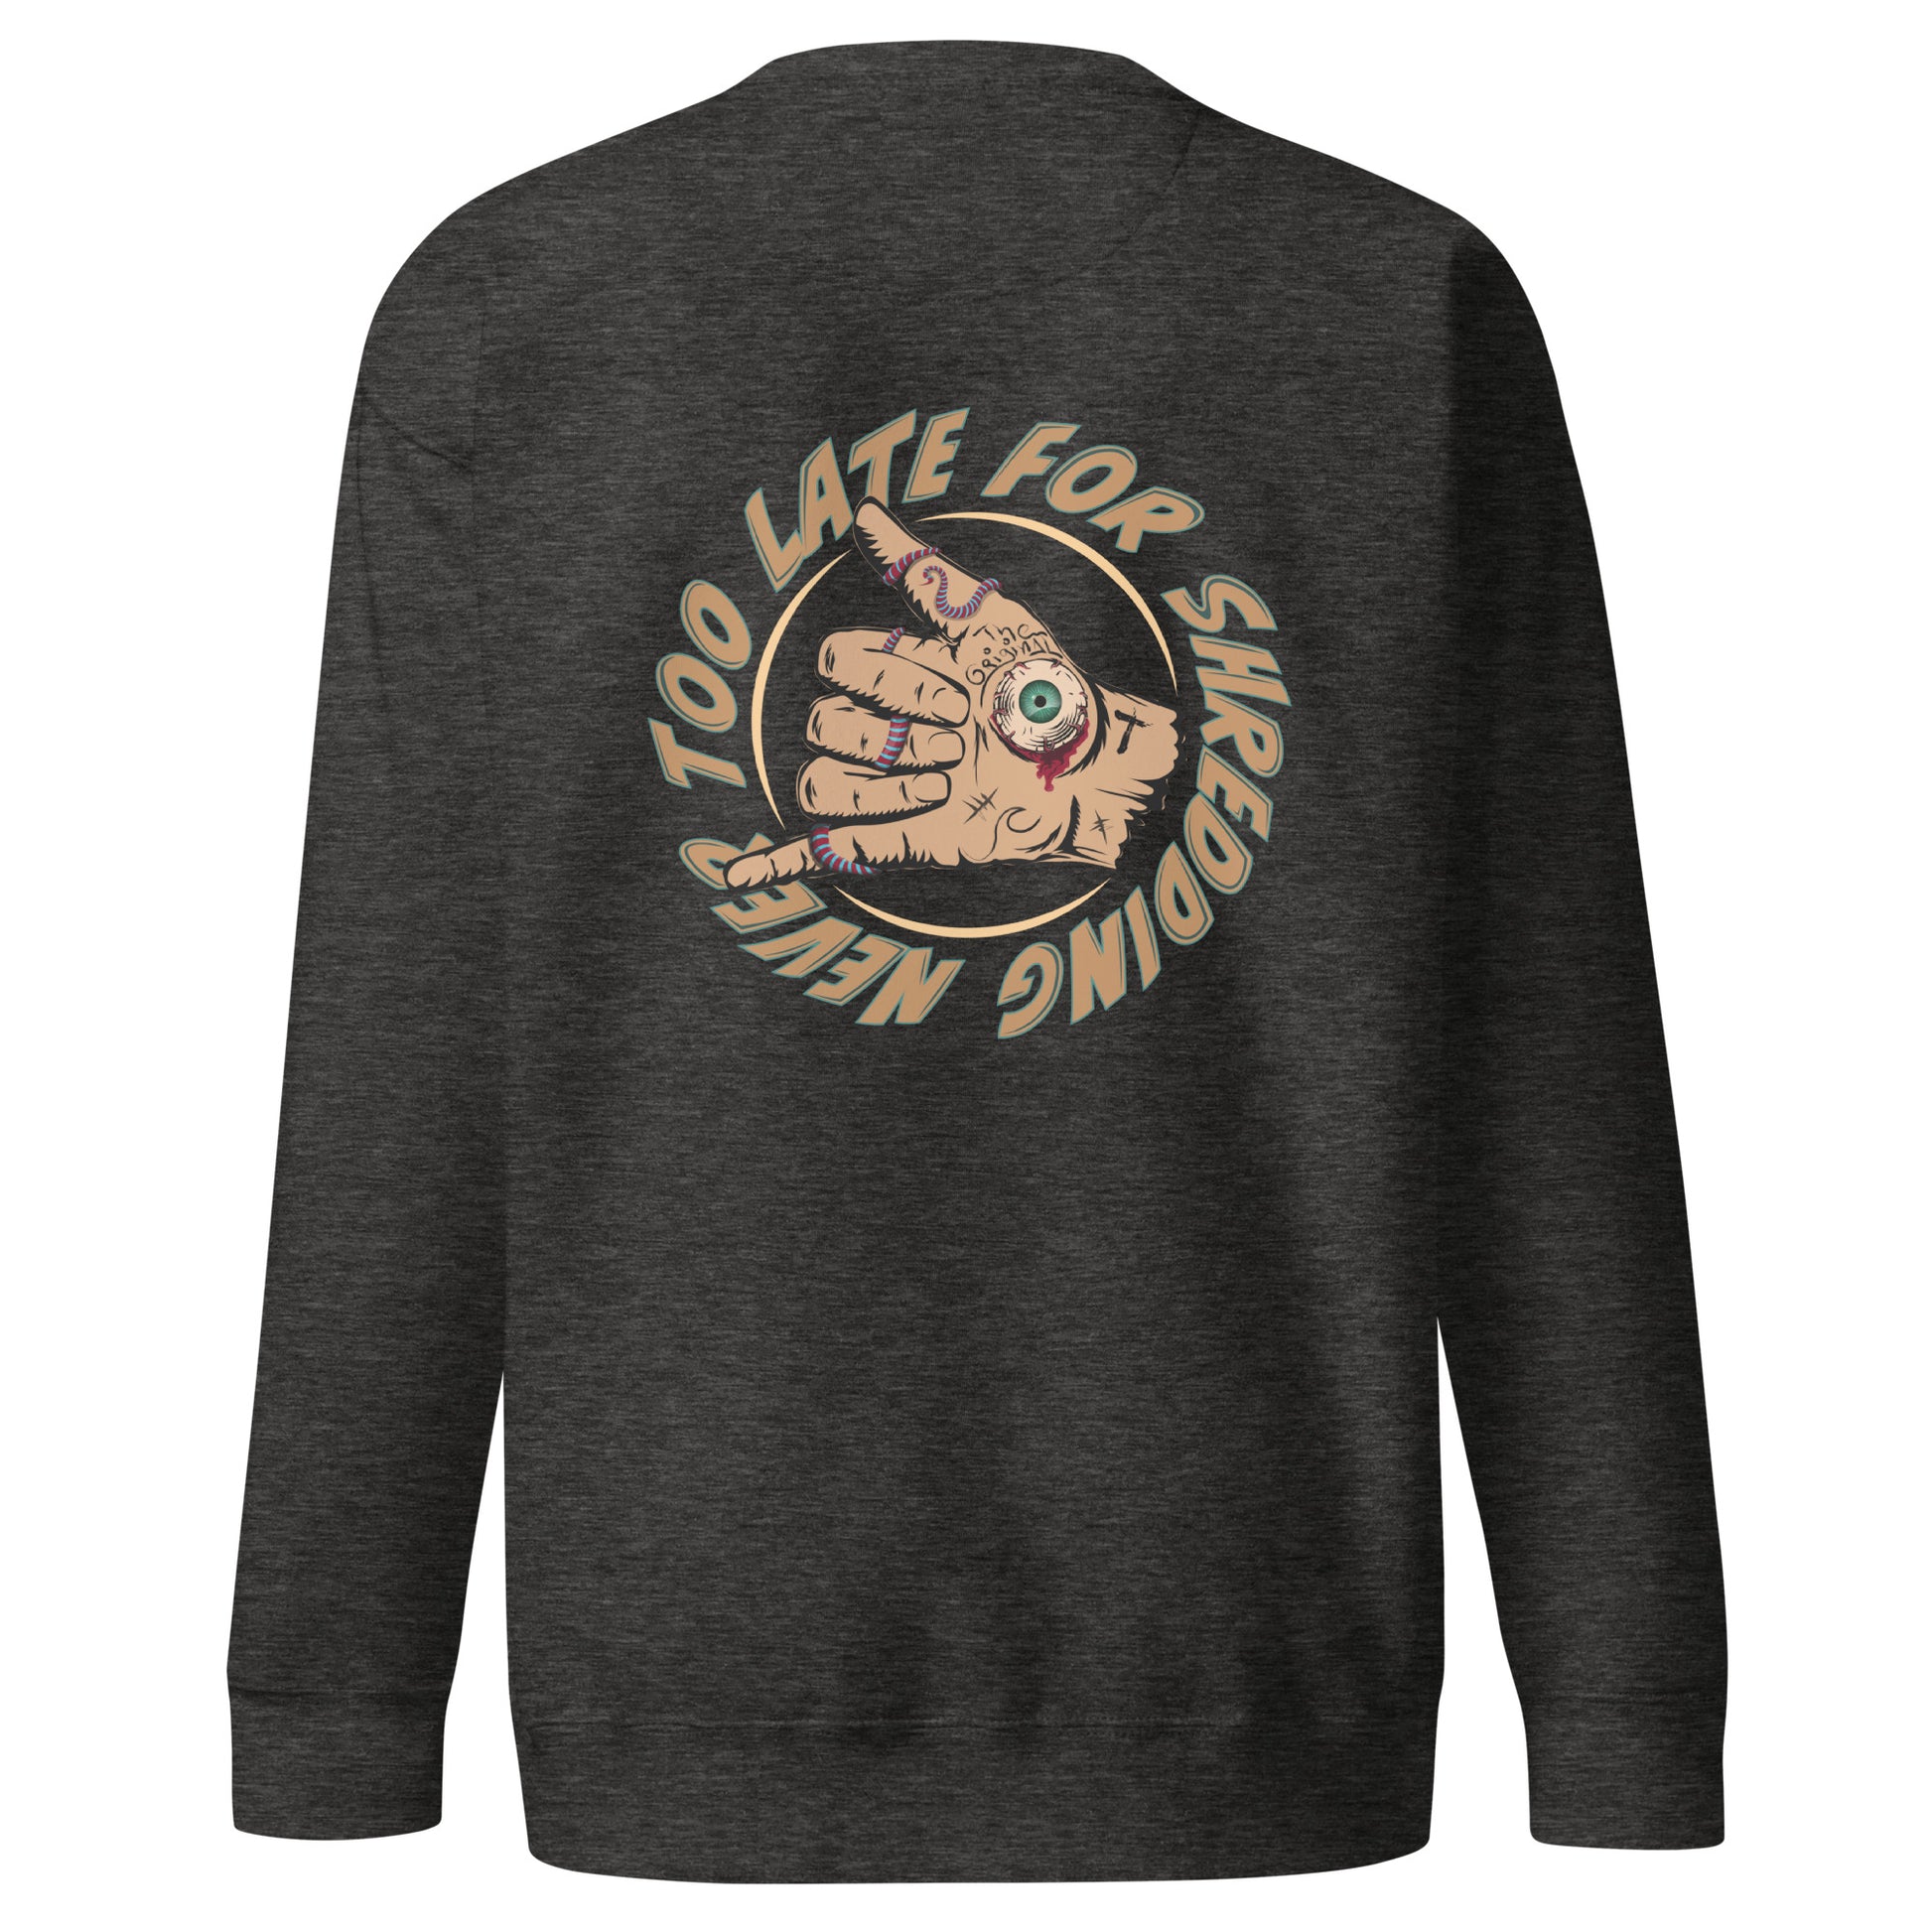 Sweatshirt Never Too Late shaka hand volcom style surfeur, avec le logo Late surfoard, sweat unisex de dos couleur charcoal